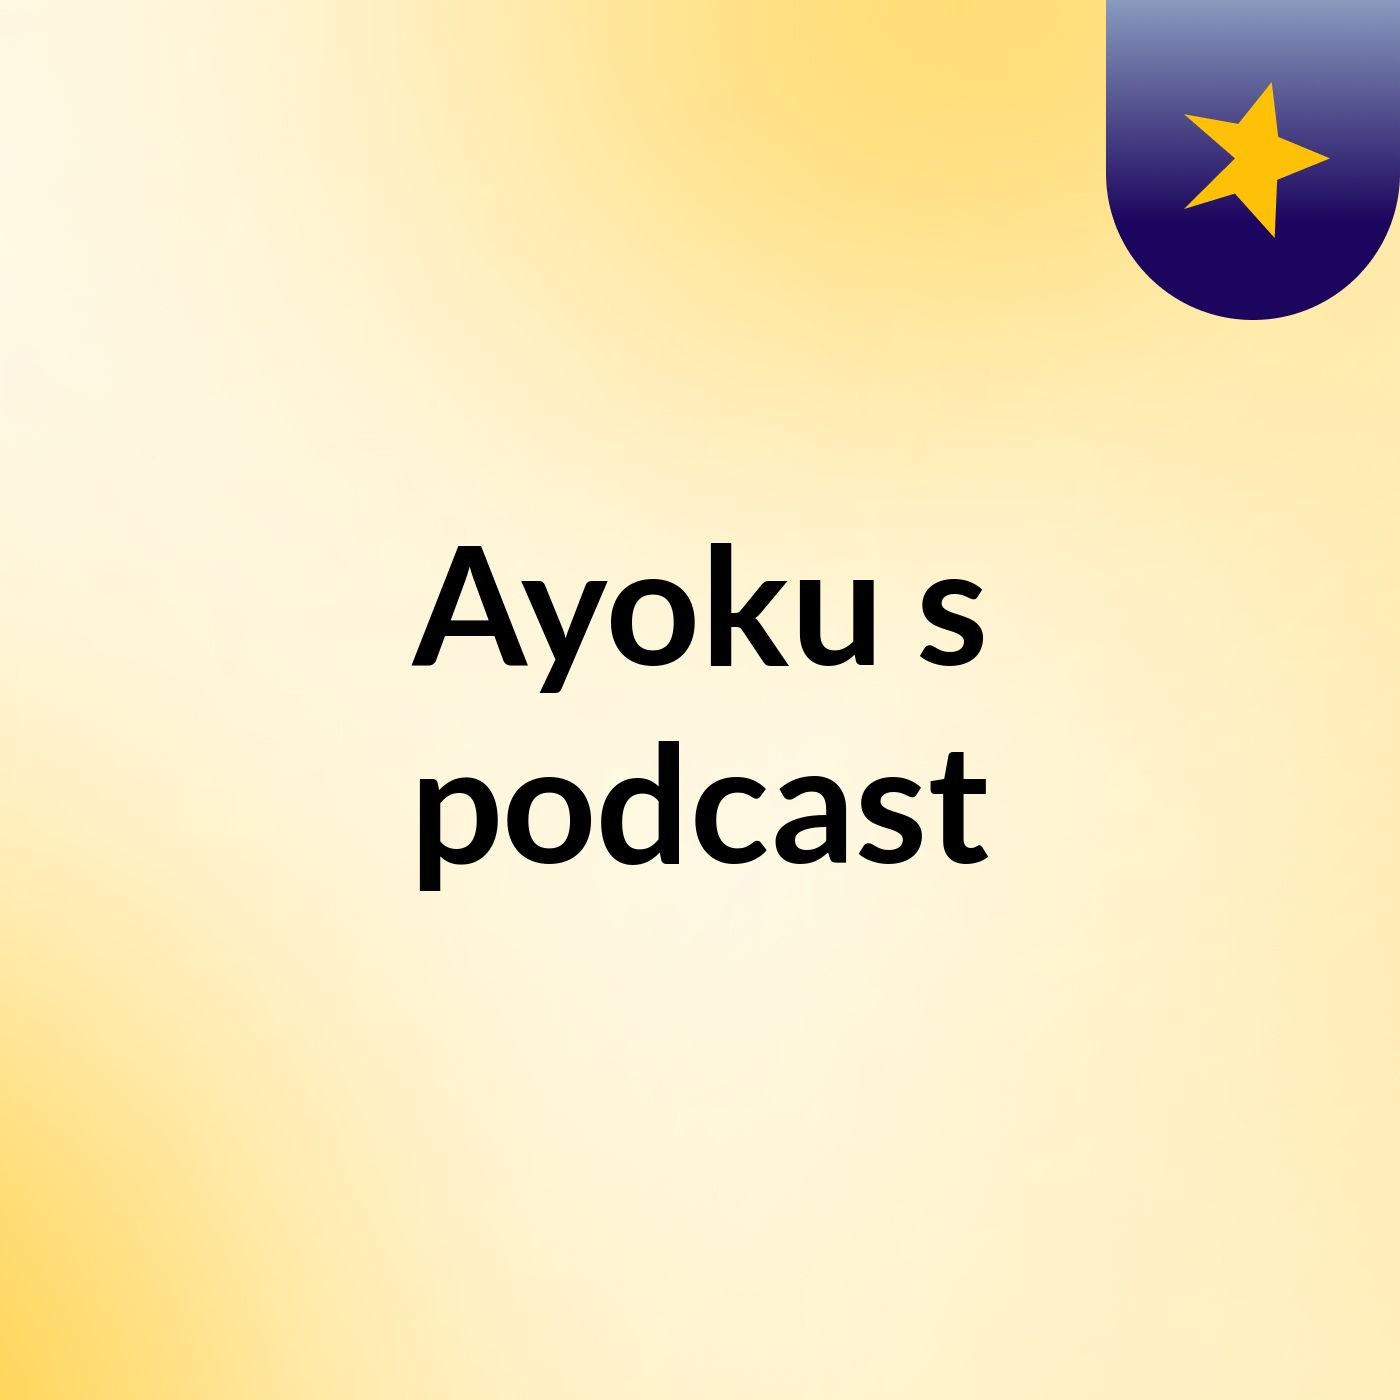 Episode 2 - Ayoku's Business podcast